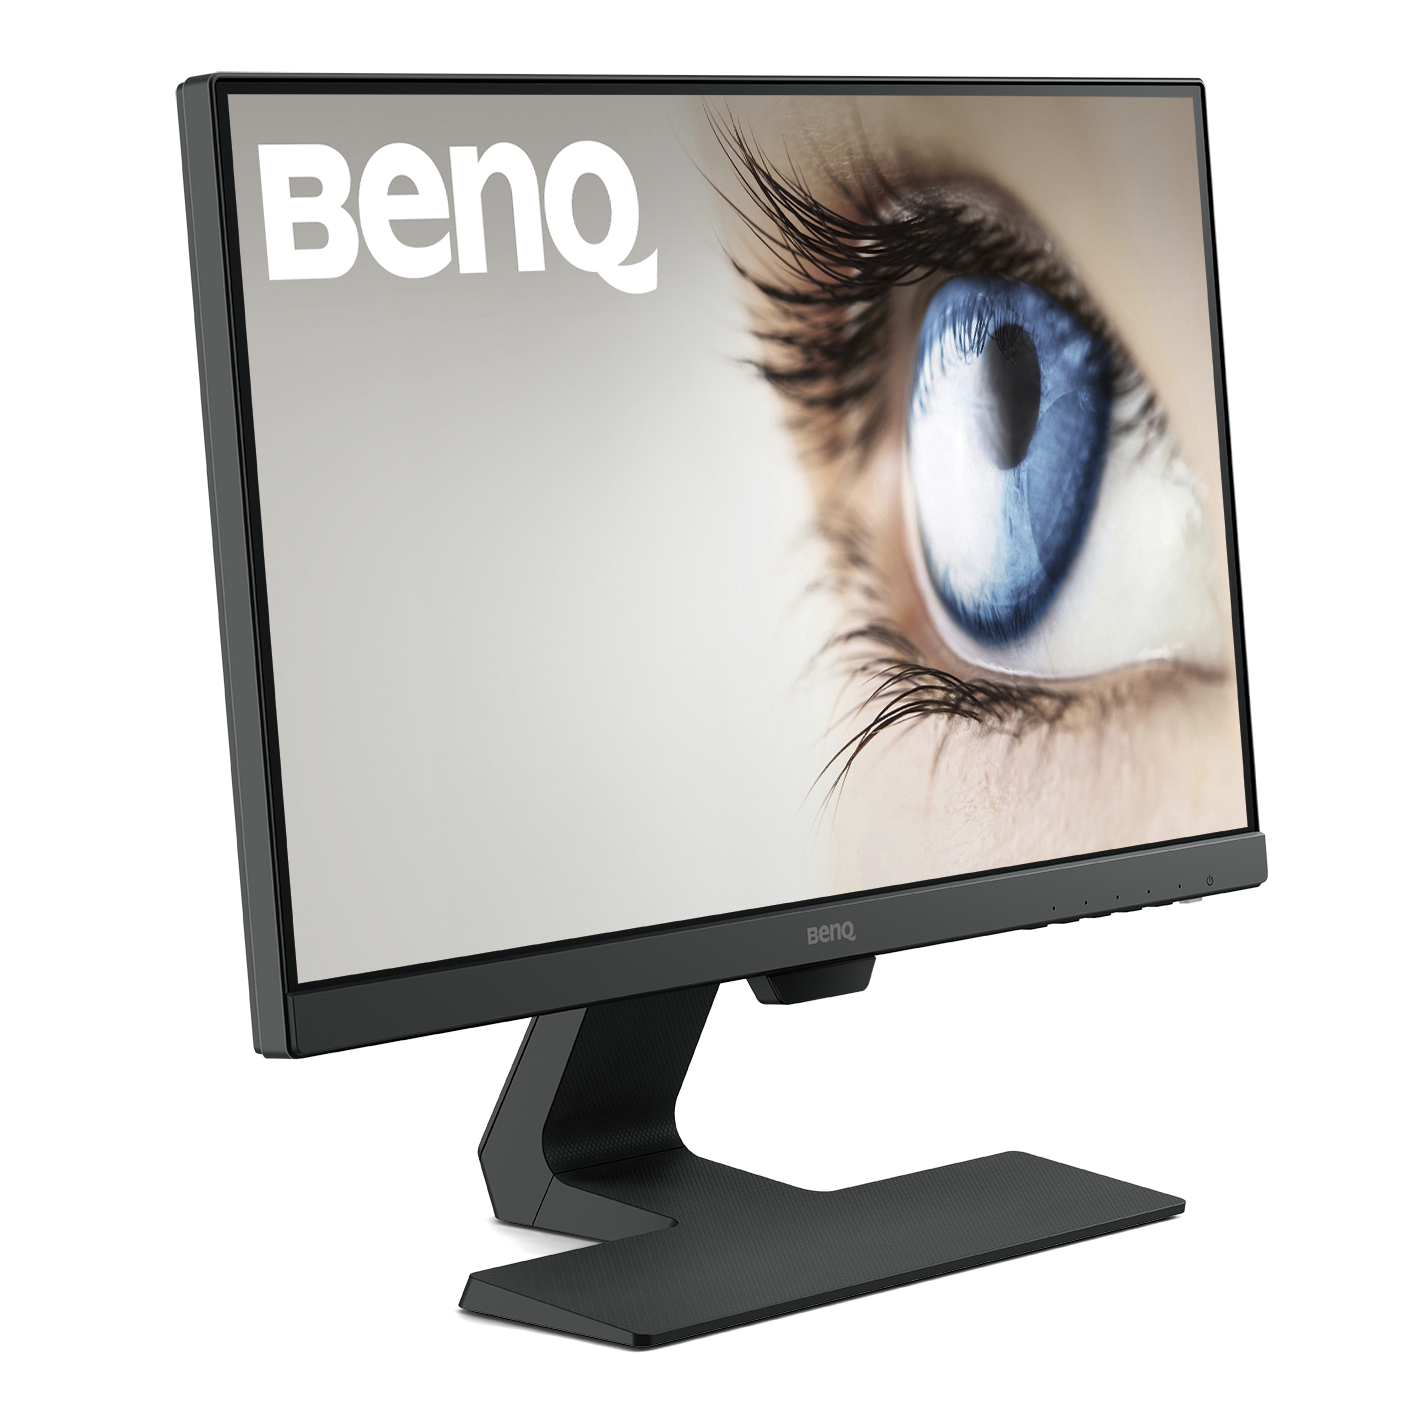 BenQ GW2283 22吋 全高清護眼顯示器